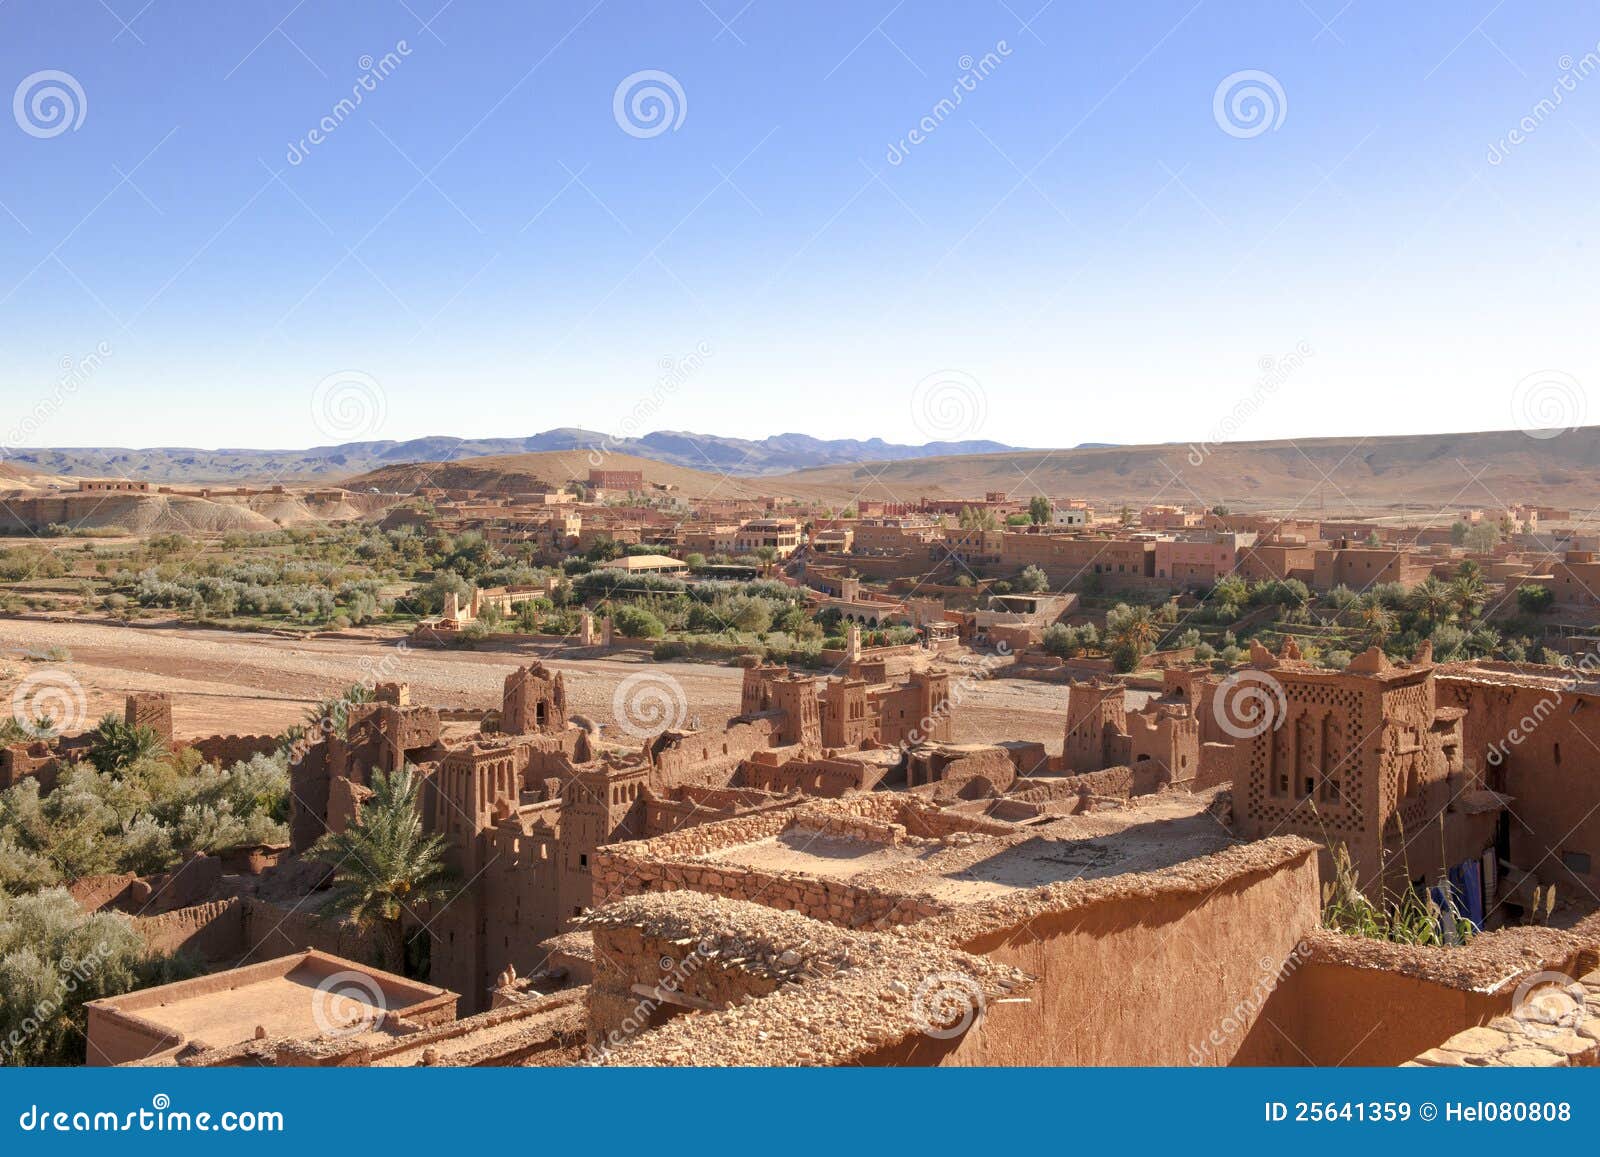 kasbah ait benhaddou, morocco